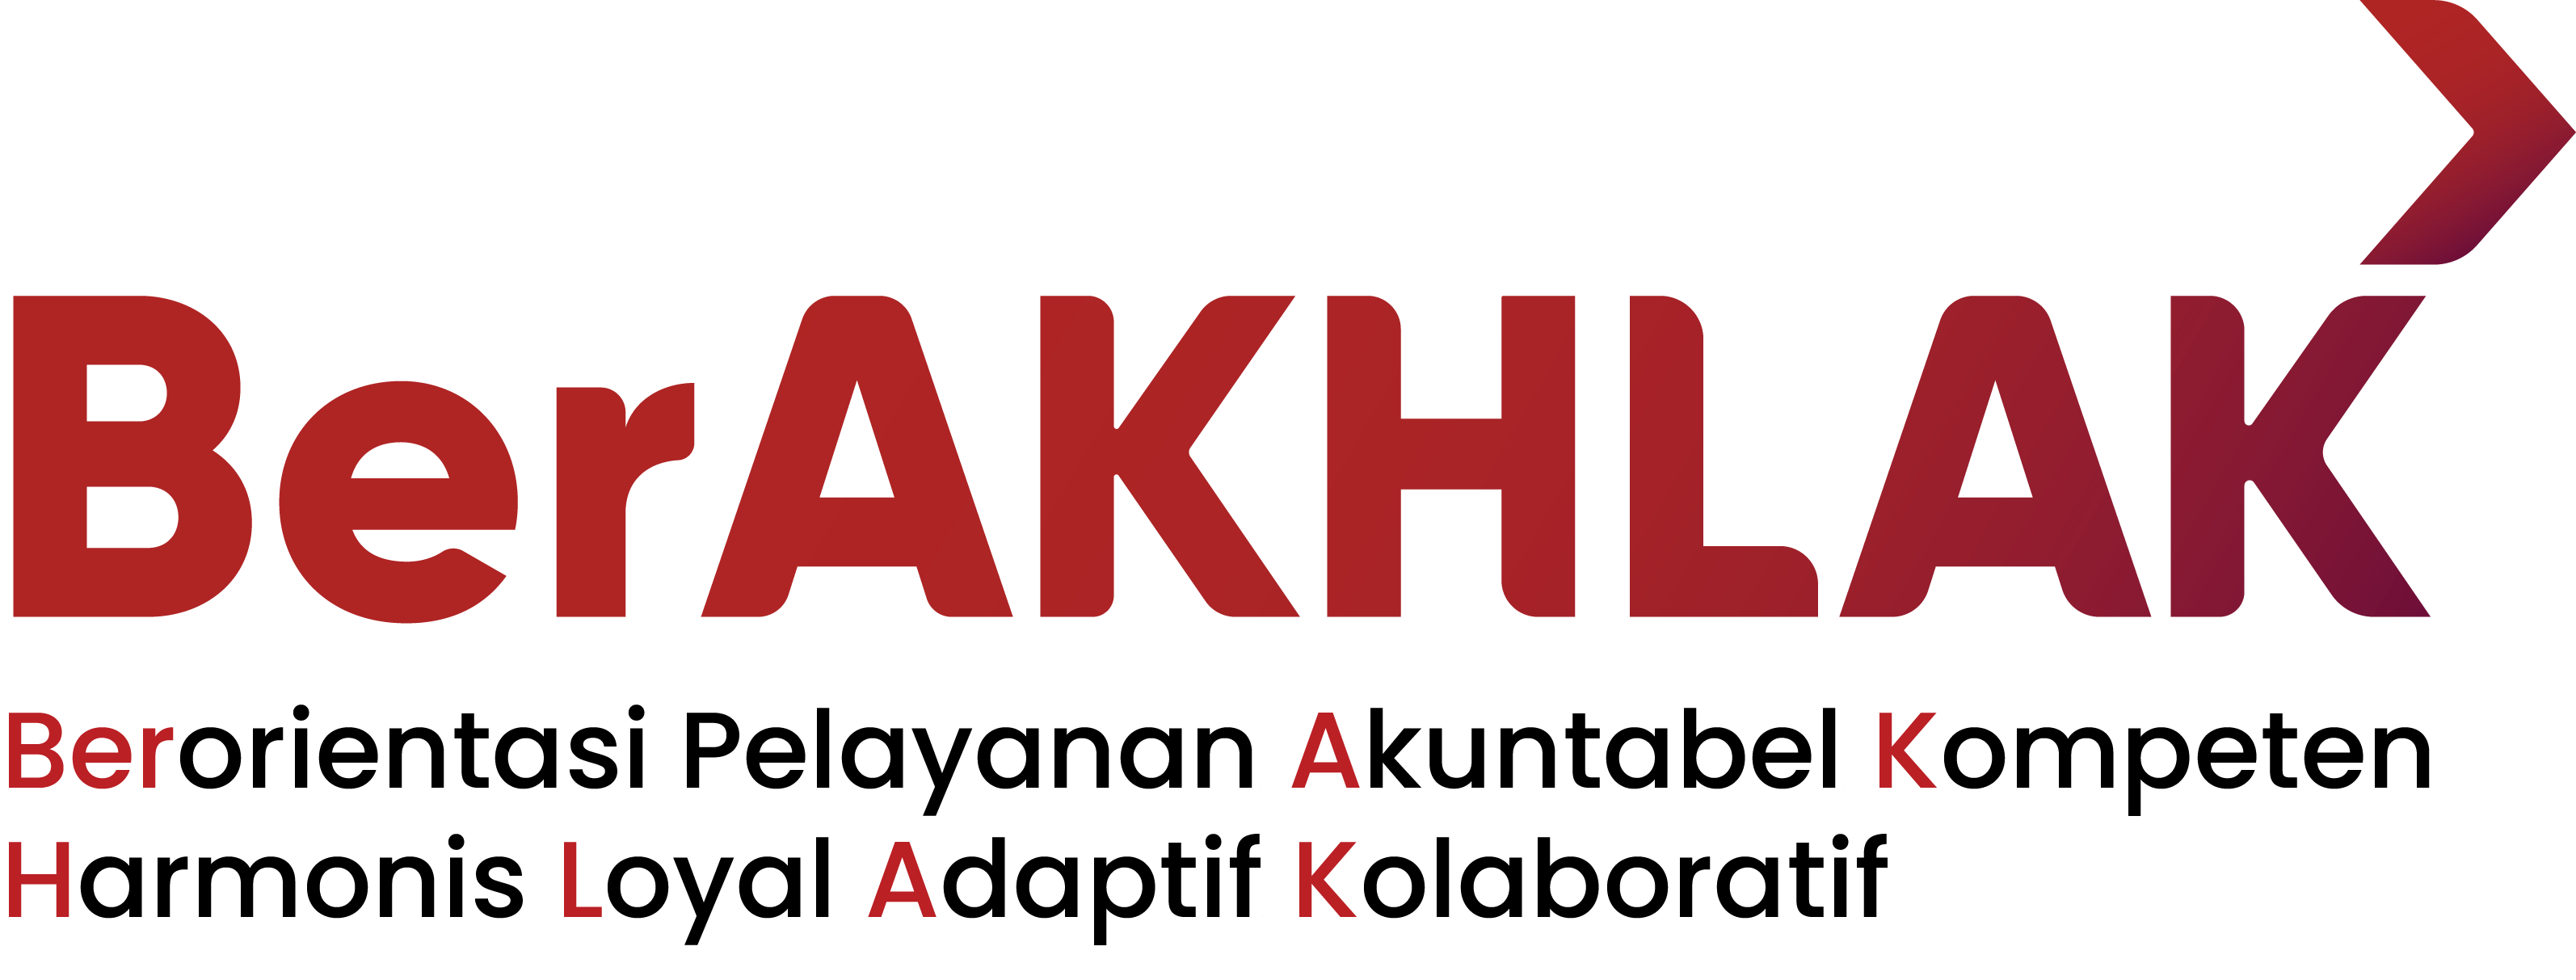 Logo_BerAKHLAK_1.png